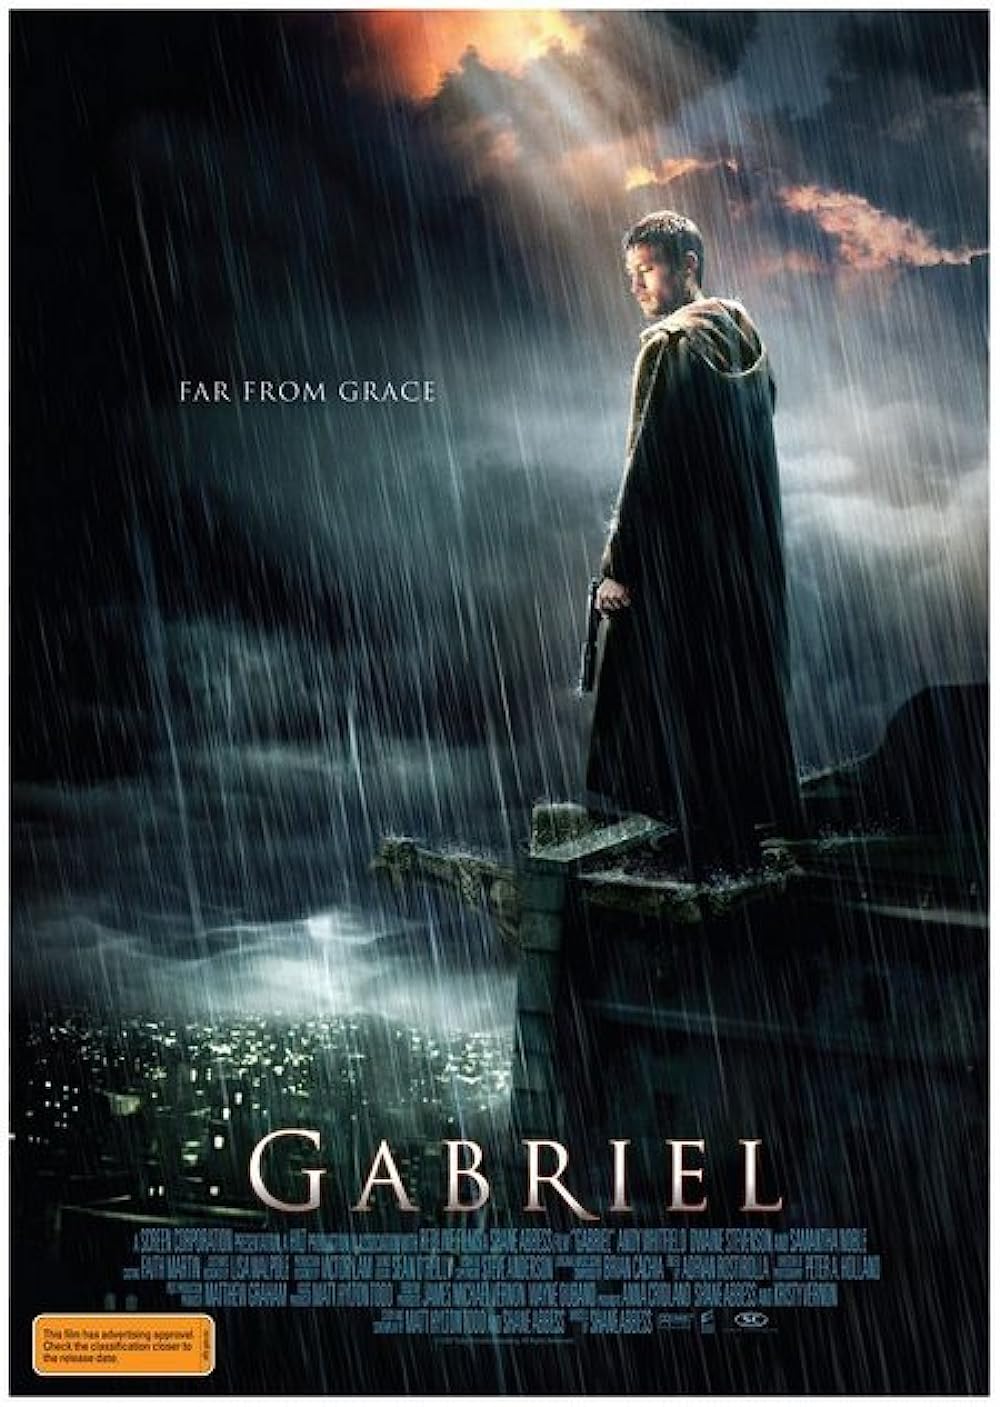 FULL MOVIE: Gabriel (2007) [Action]